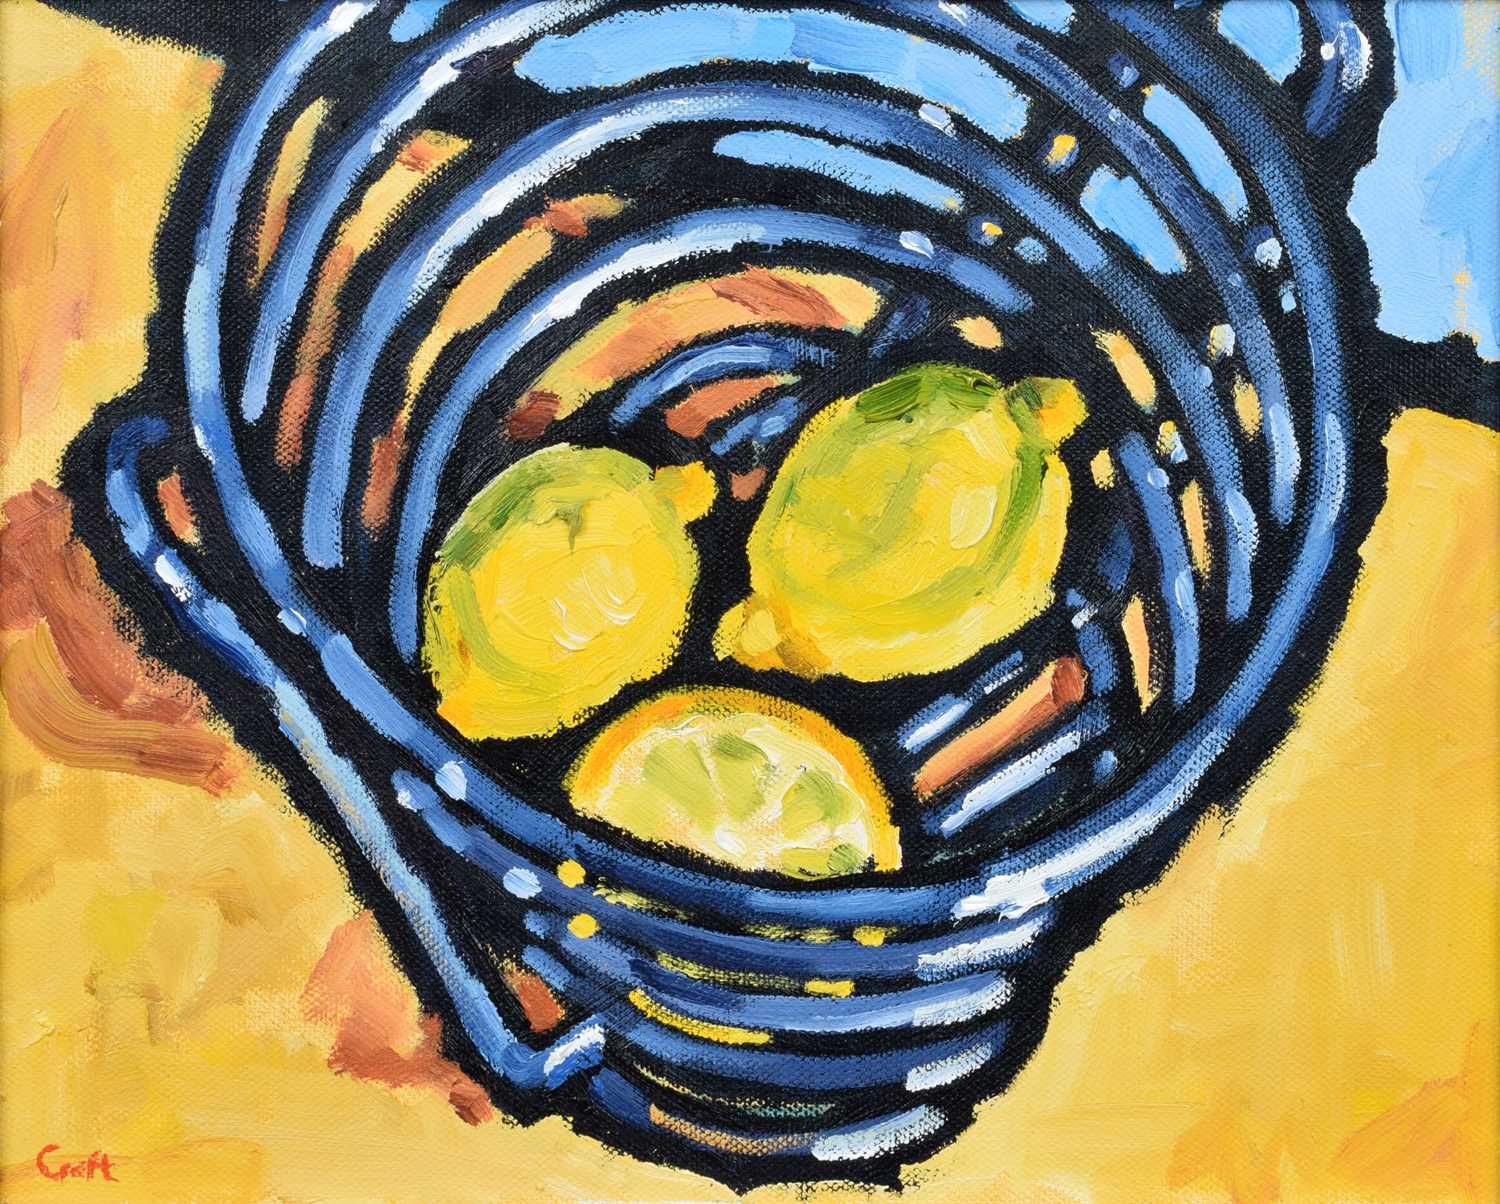 Malcolm Croft (British 1964-) "Lemons in a Wire Basket", oil.